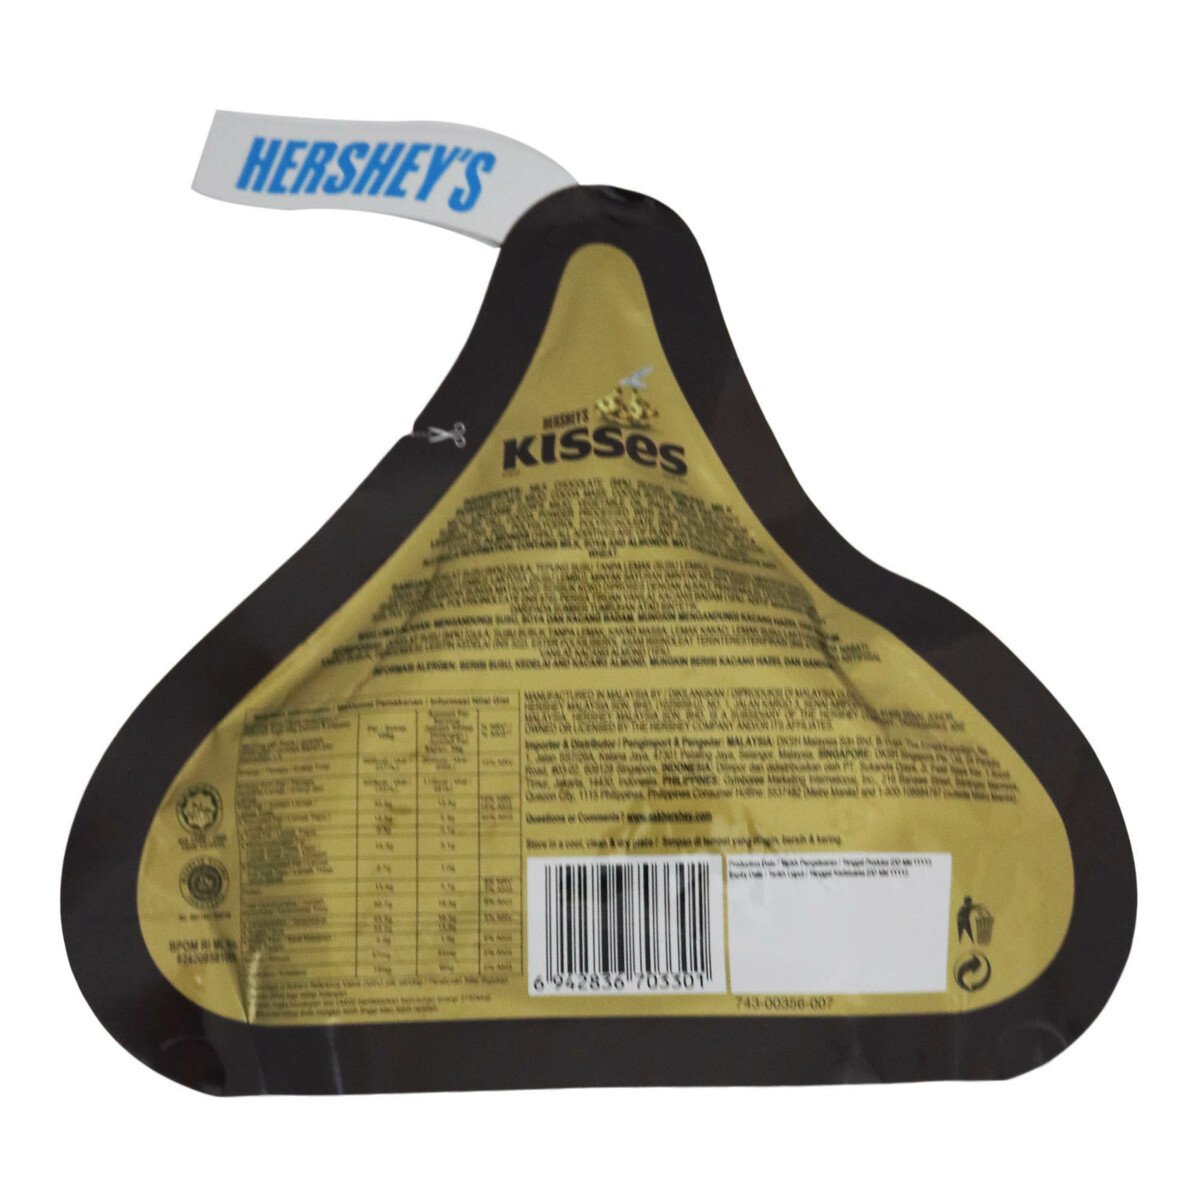 Hersheys Milk With Almond Iconic Kisses 146g